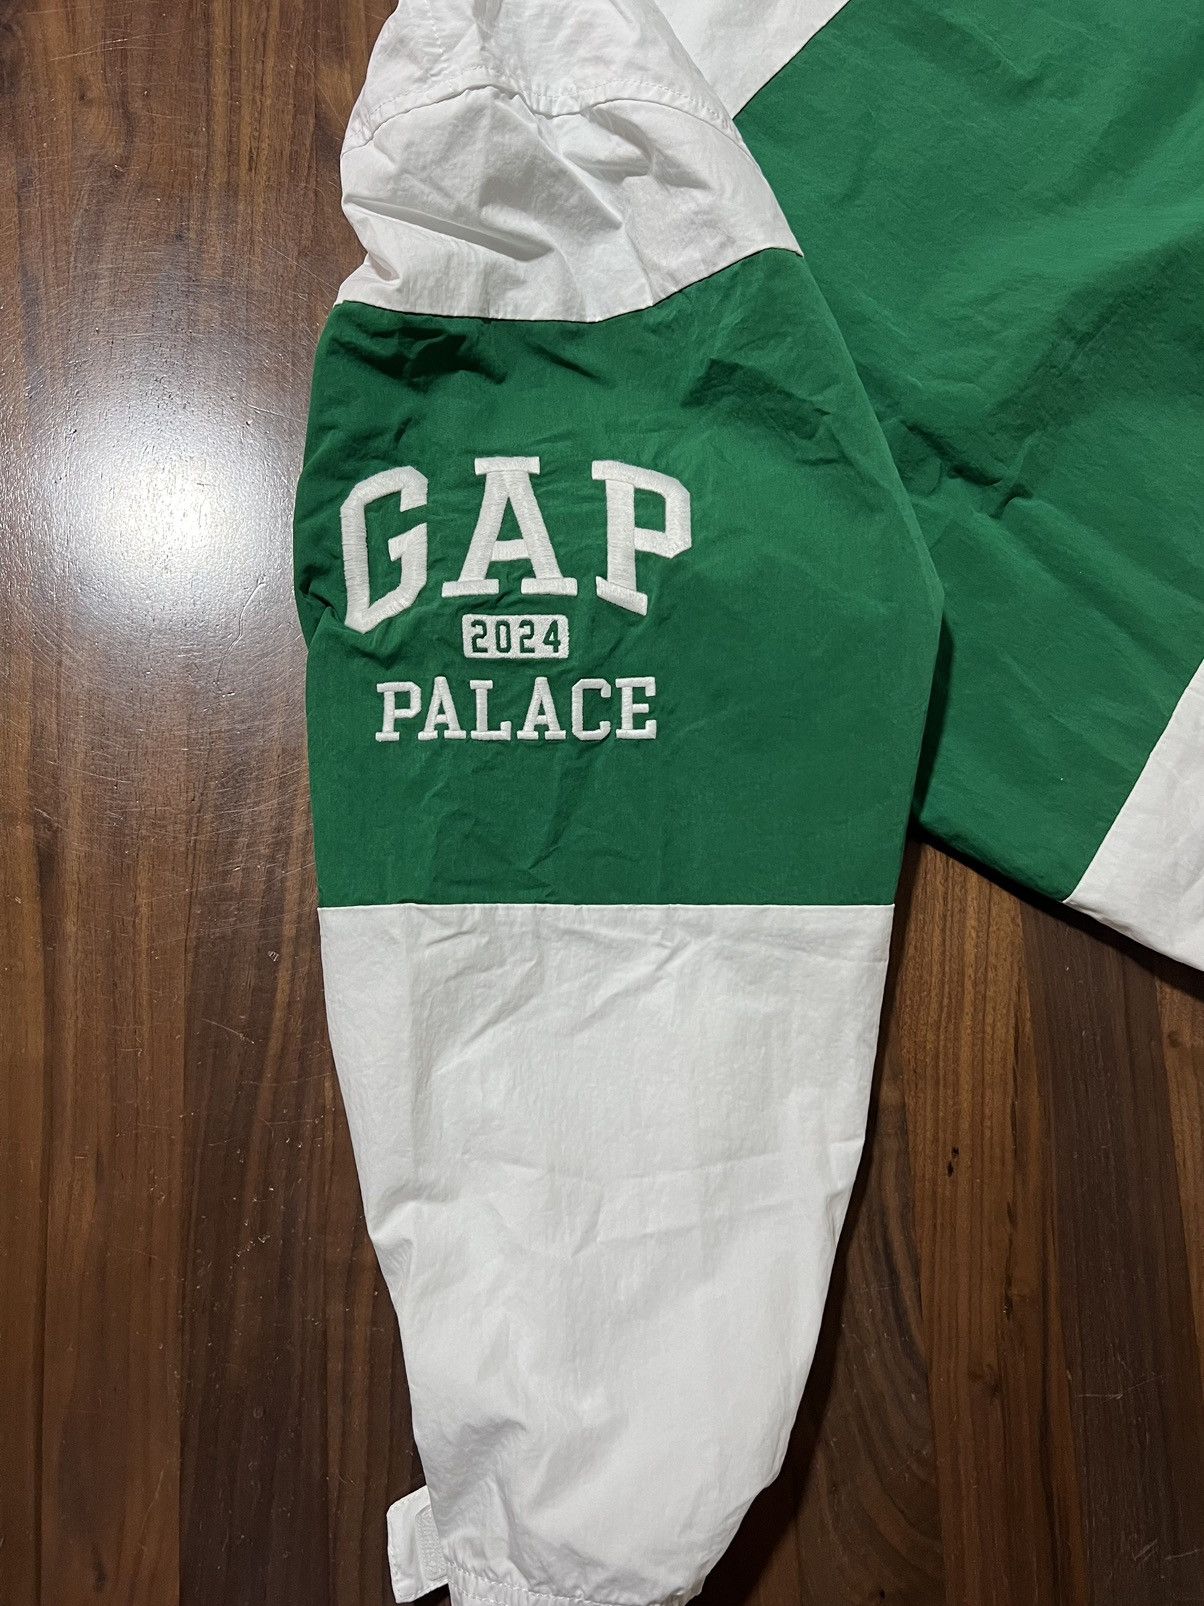 Gap Palace Gap Windbreaker in Bright White (& Green) Size Large 